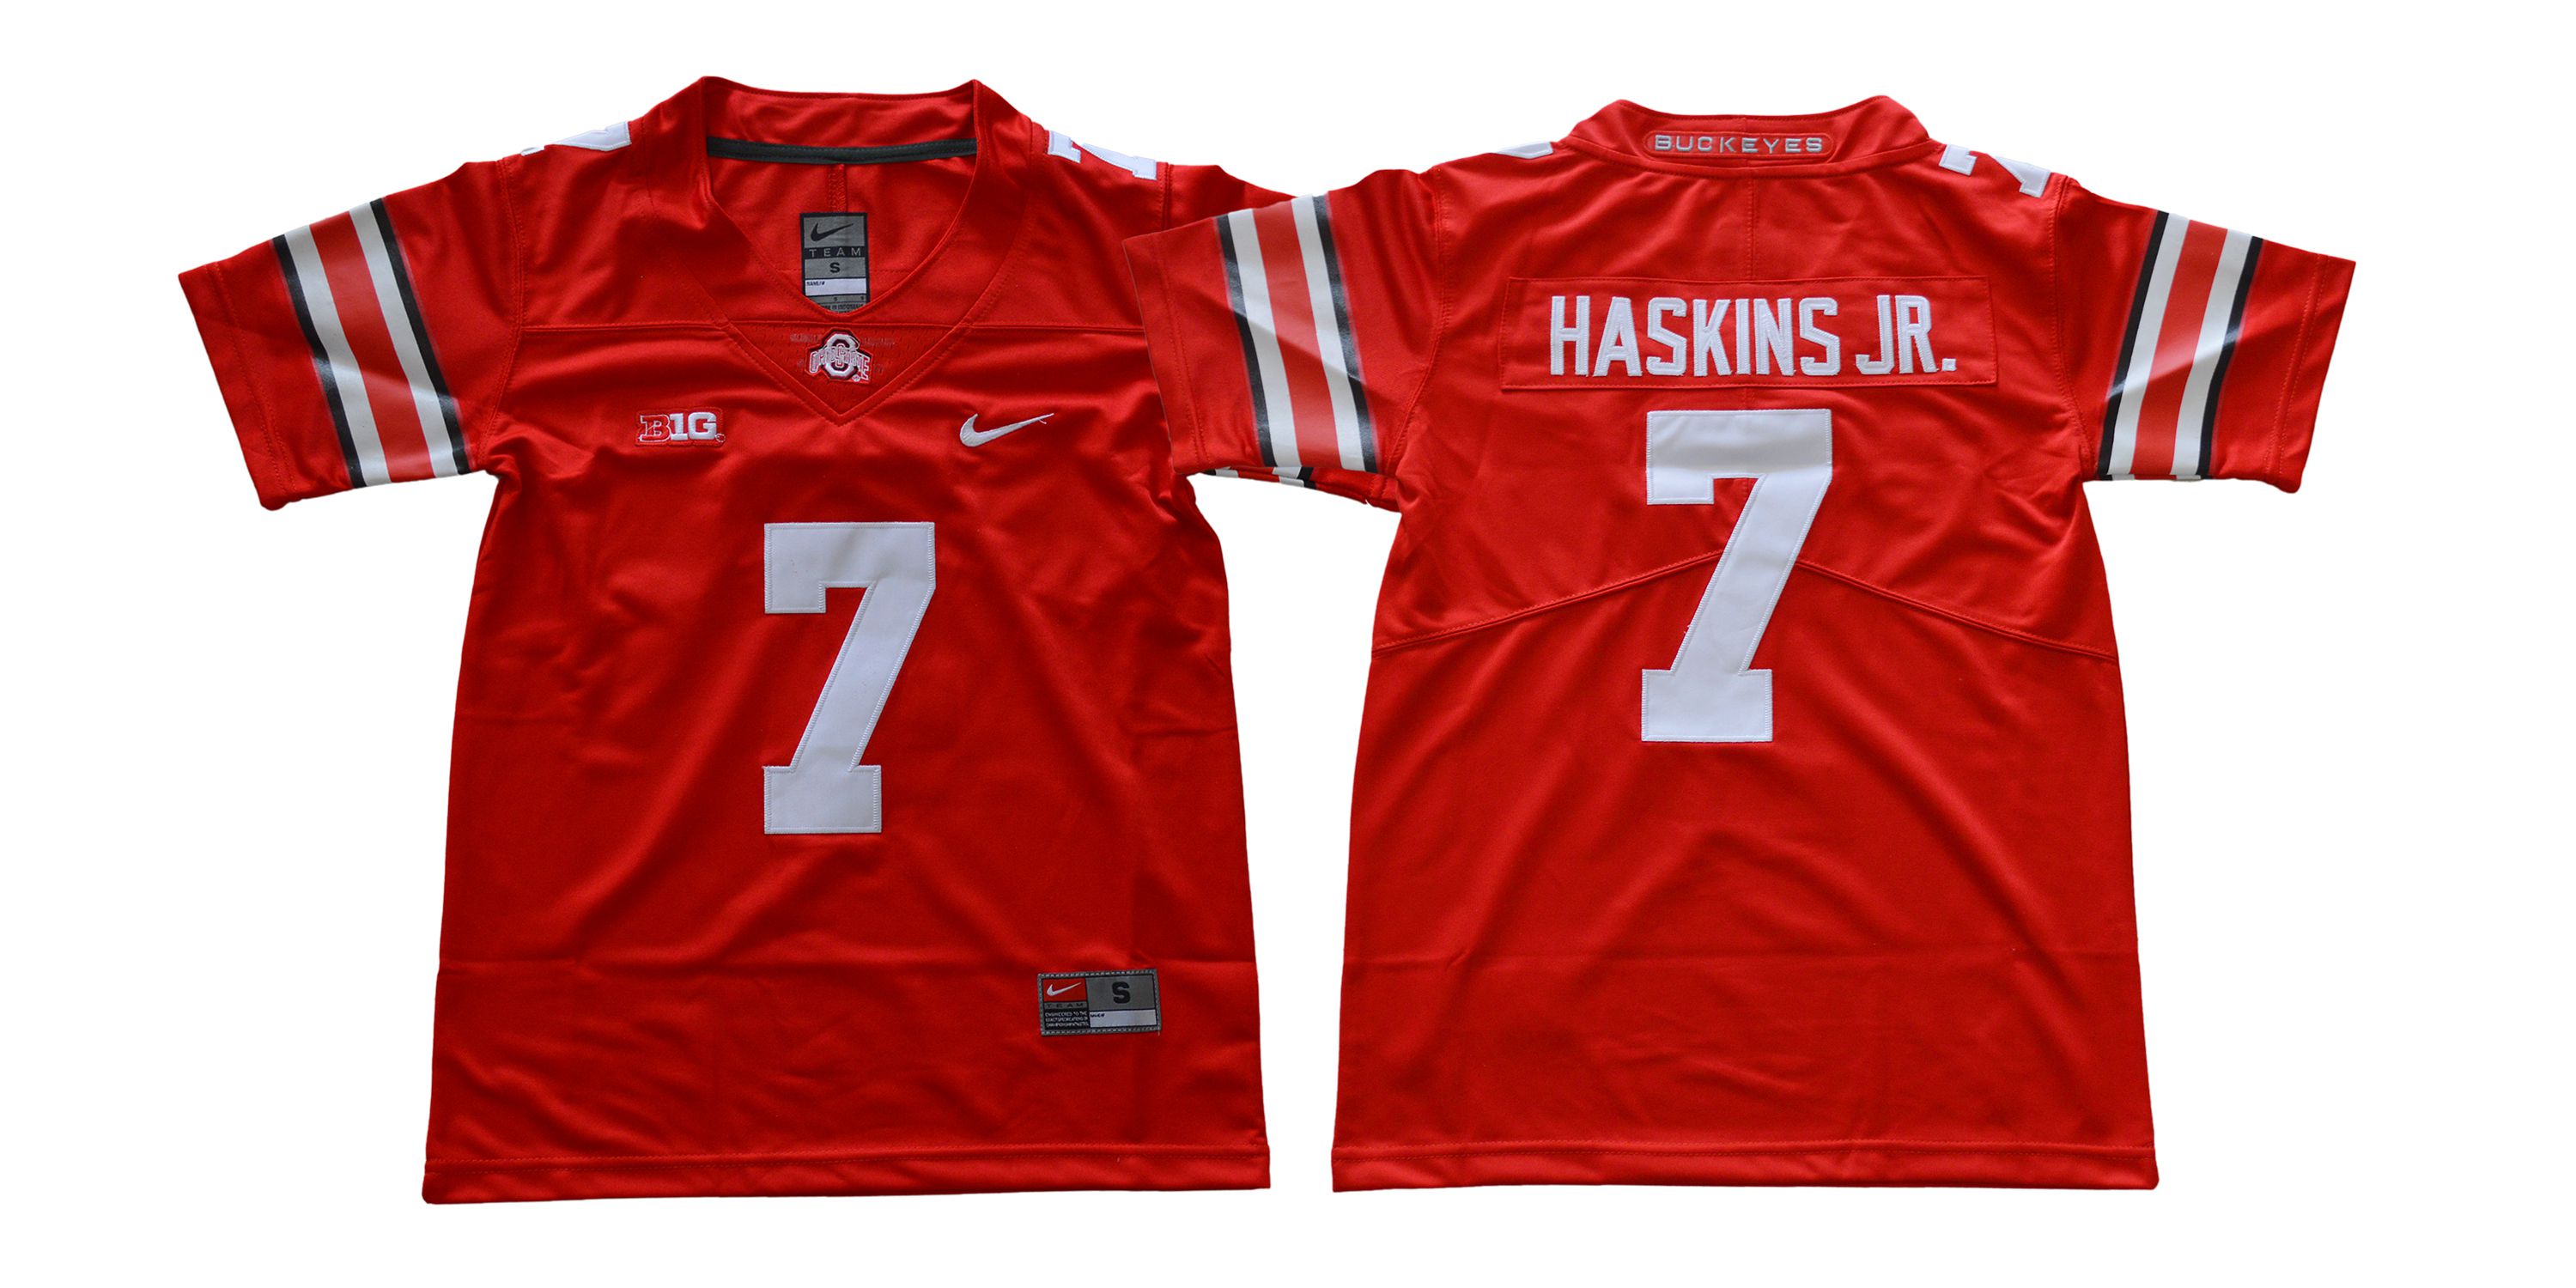 Youth Ohio State Buckeyes #7 Haskins jr Diamond Red Nike NCAA Jerseys